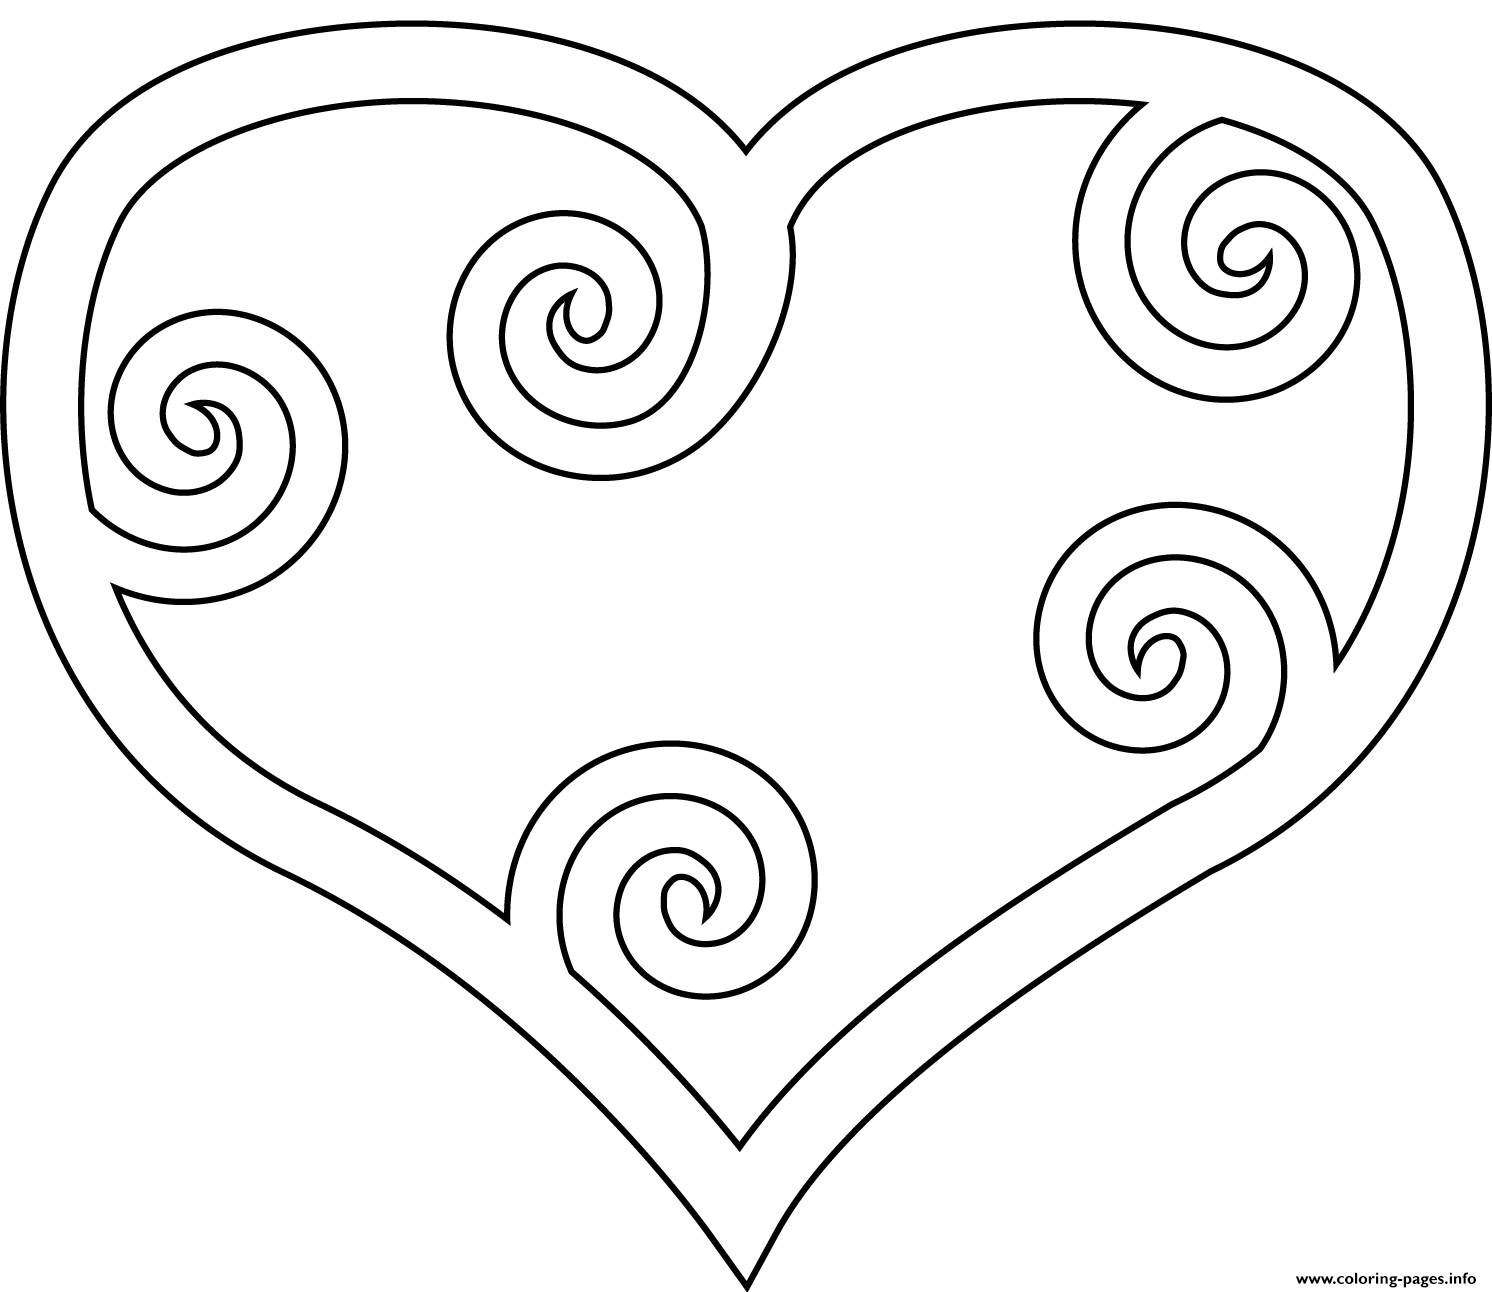 Шаблон кап кут heart. Раскраска сердечко. Сердечко раскраска для детей. Раскраска сердечко с узорами. Раскраска сердце с узорами.